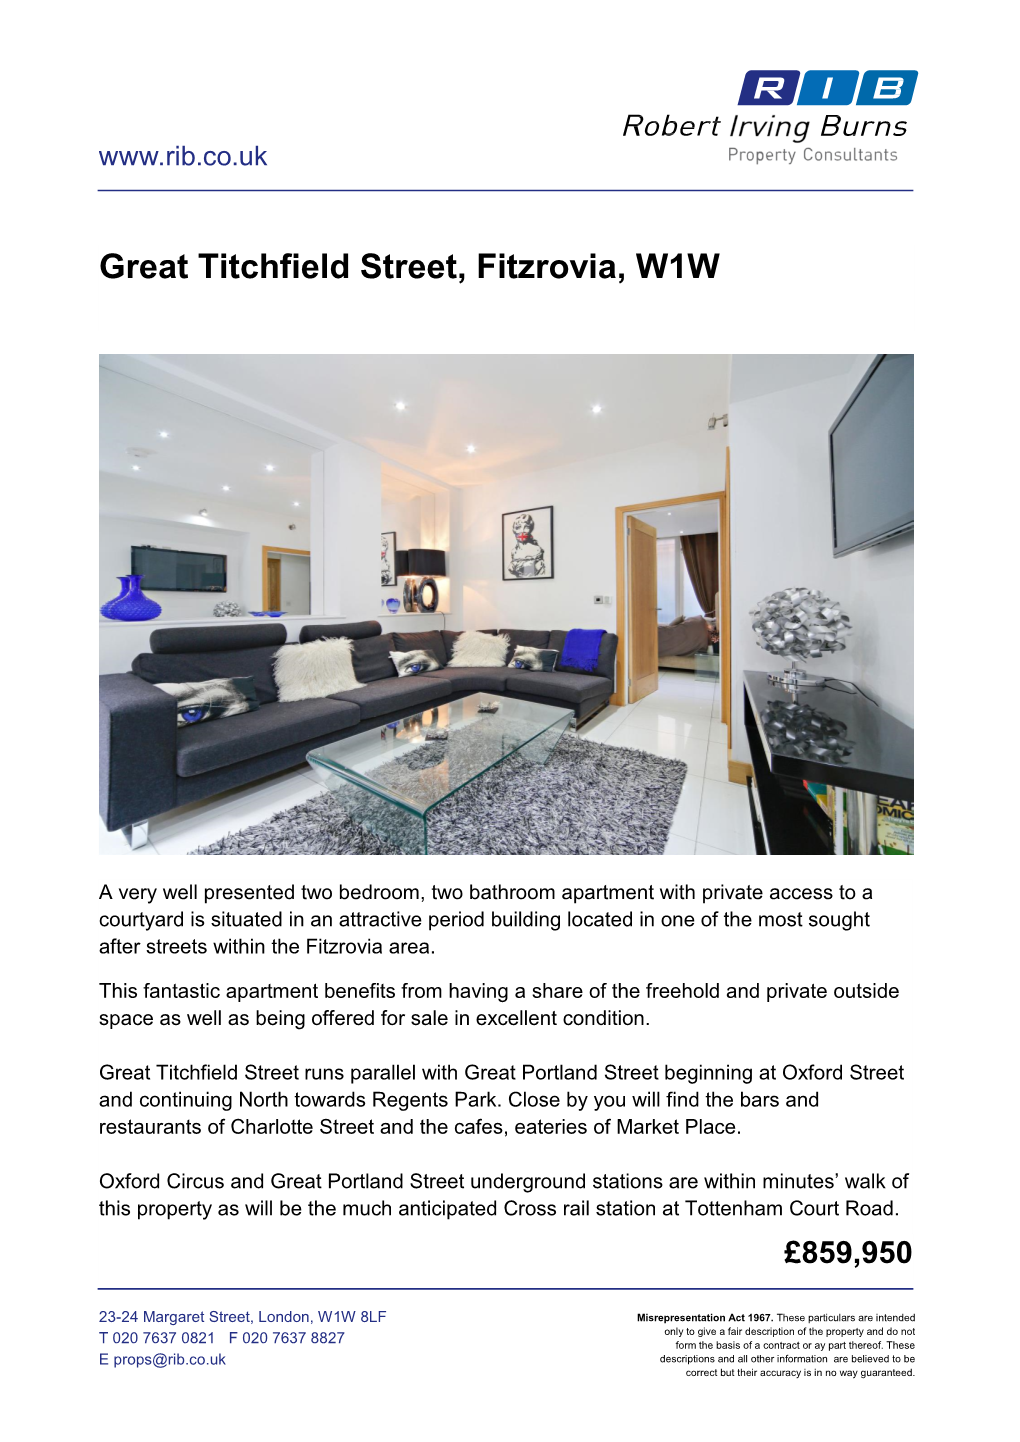 Great Titchfield Street, Fitzrovia, W1W